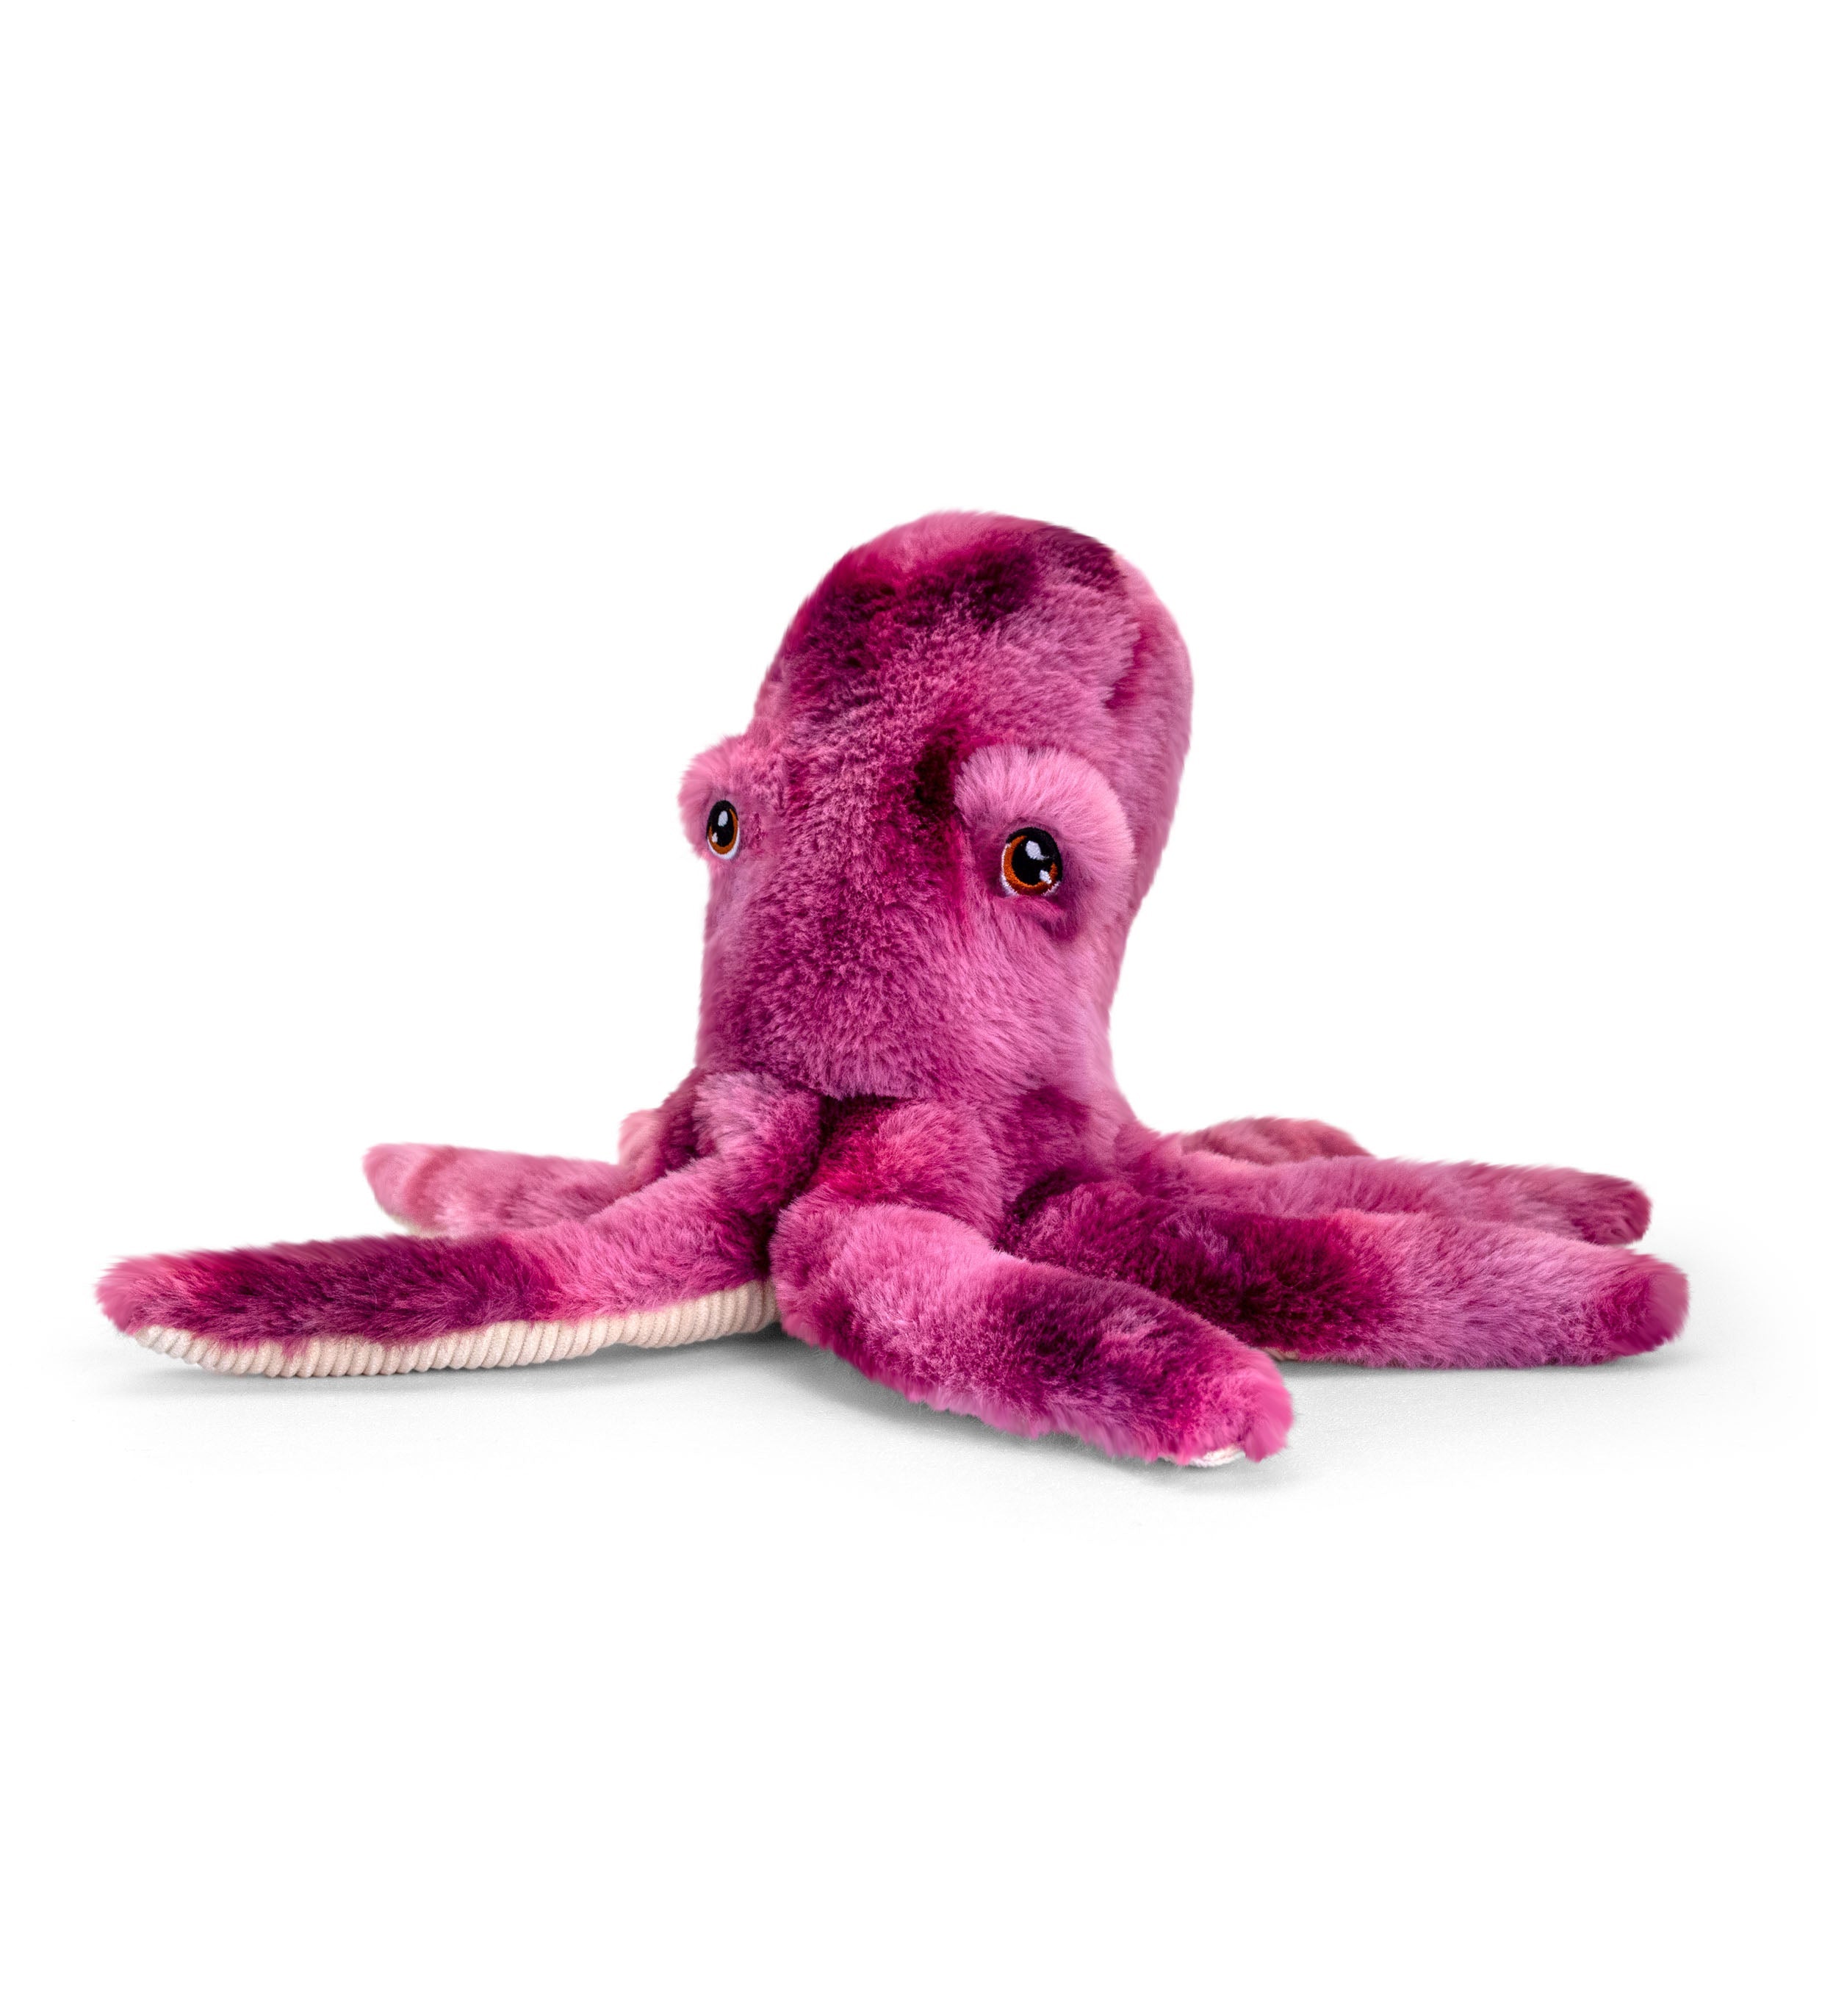 Octopus Soft Toy - Keel Toys - 25cm